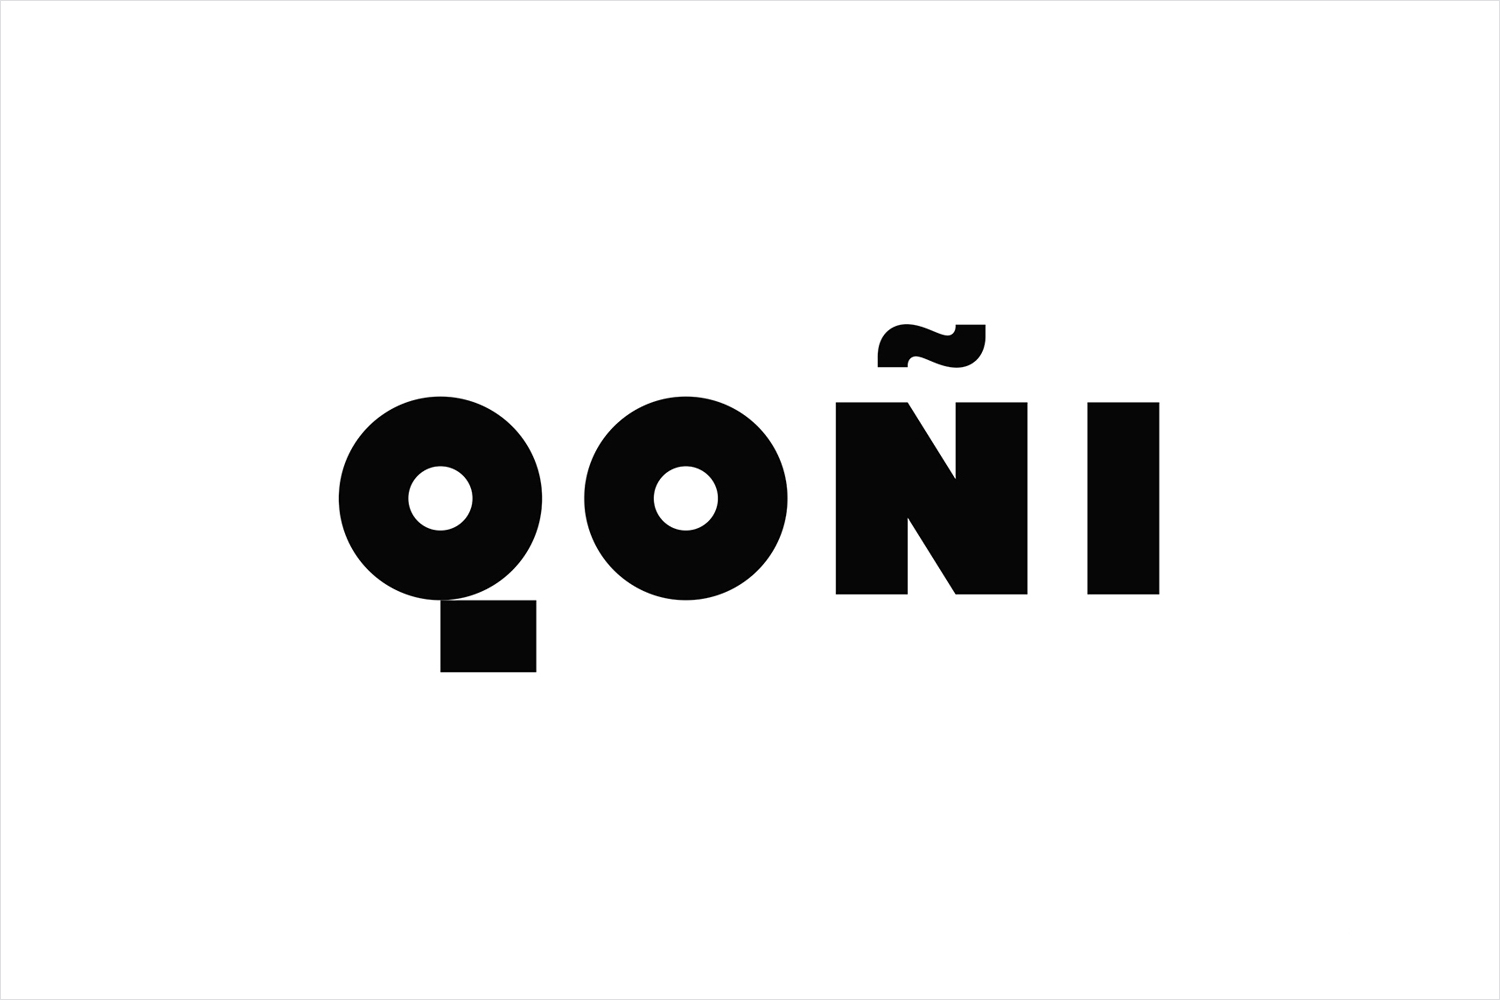 Creative Logotype Gallery & Inspiration: Qoñi by Leo Burnett, Canada